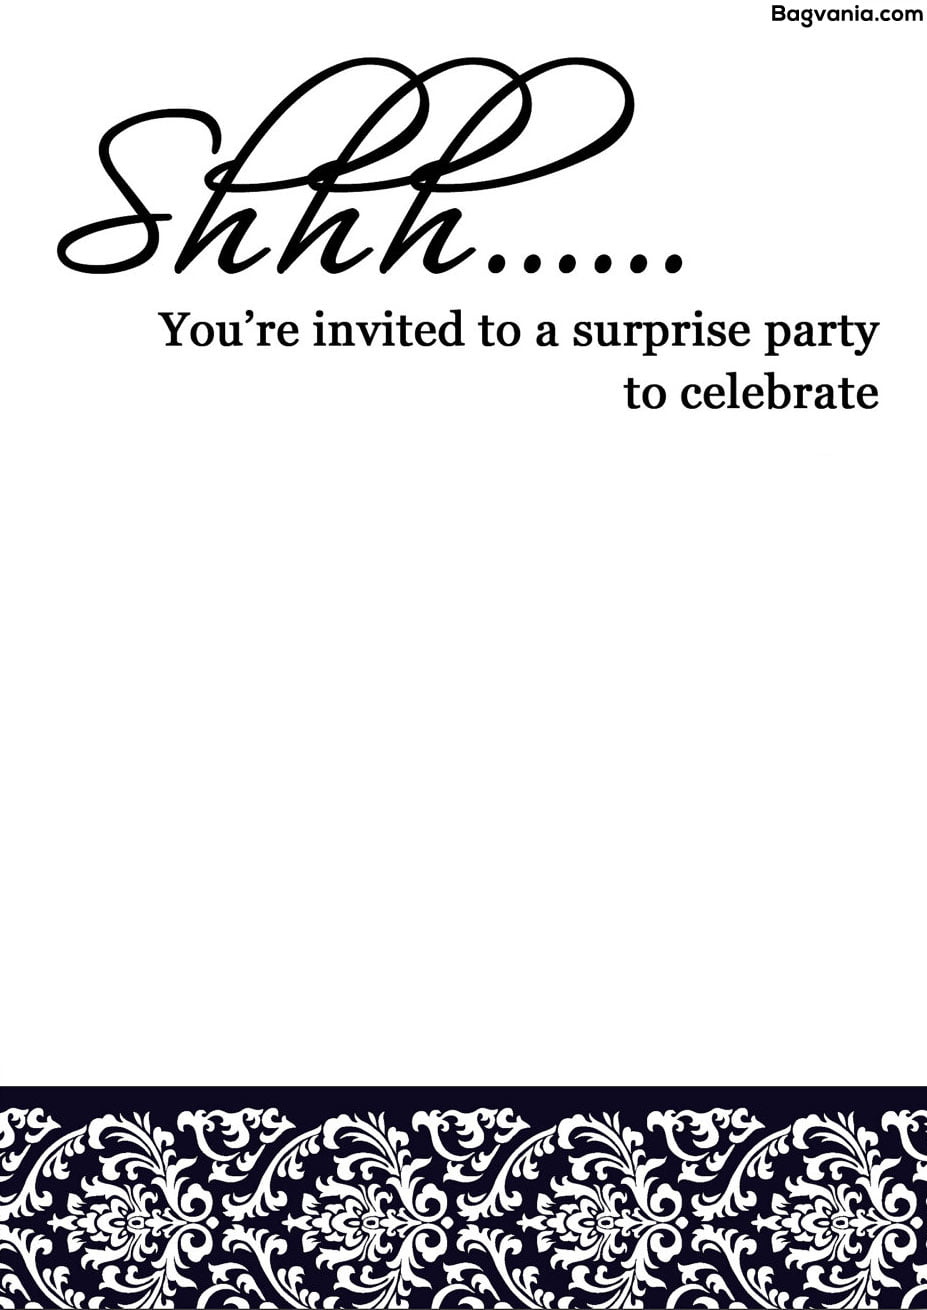 Free Printable Surprise Birthday Invitations Bagvania FREE Printable Invitation Template